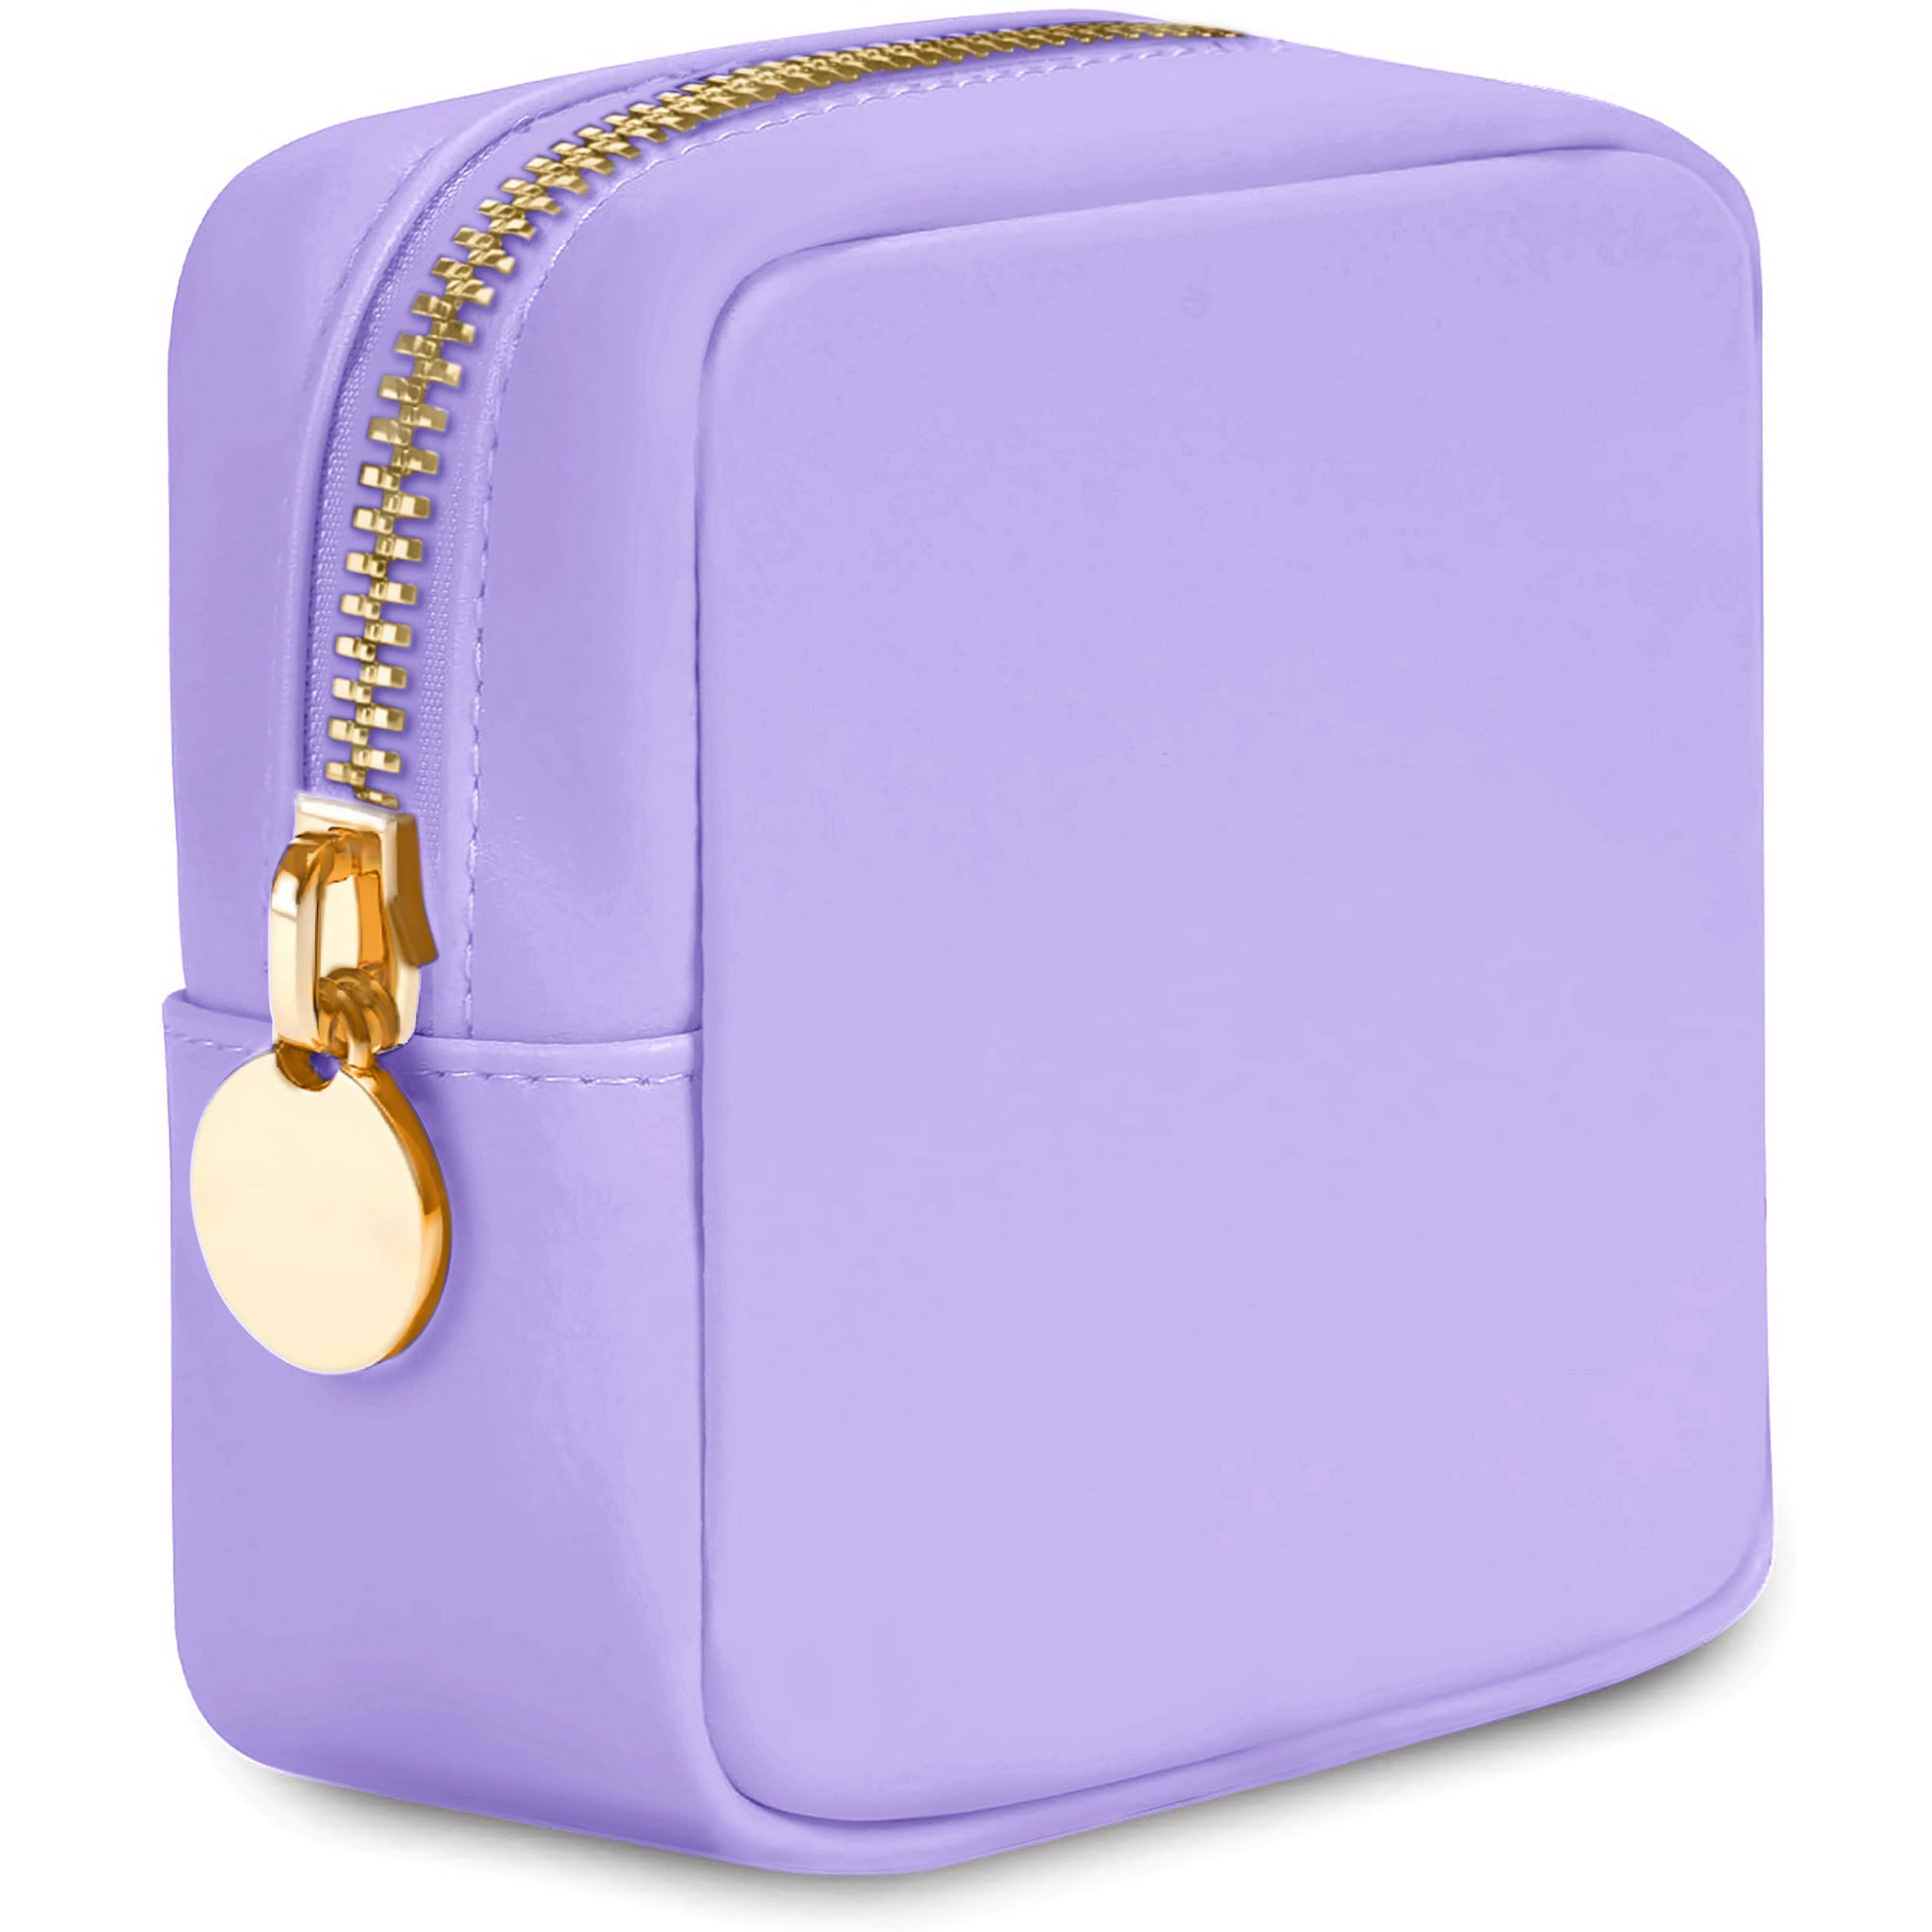 Mini Makeup Bag For Purse - Beige Pouch - Coin Purse Wallet For Women